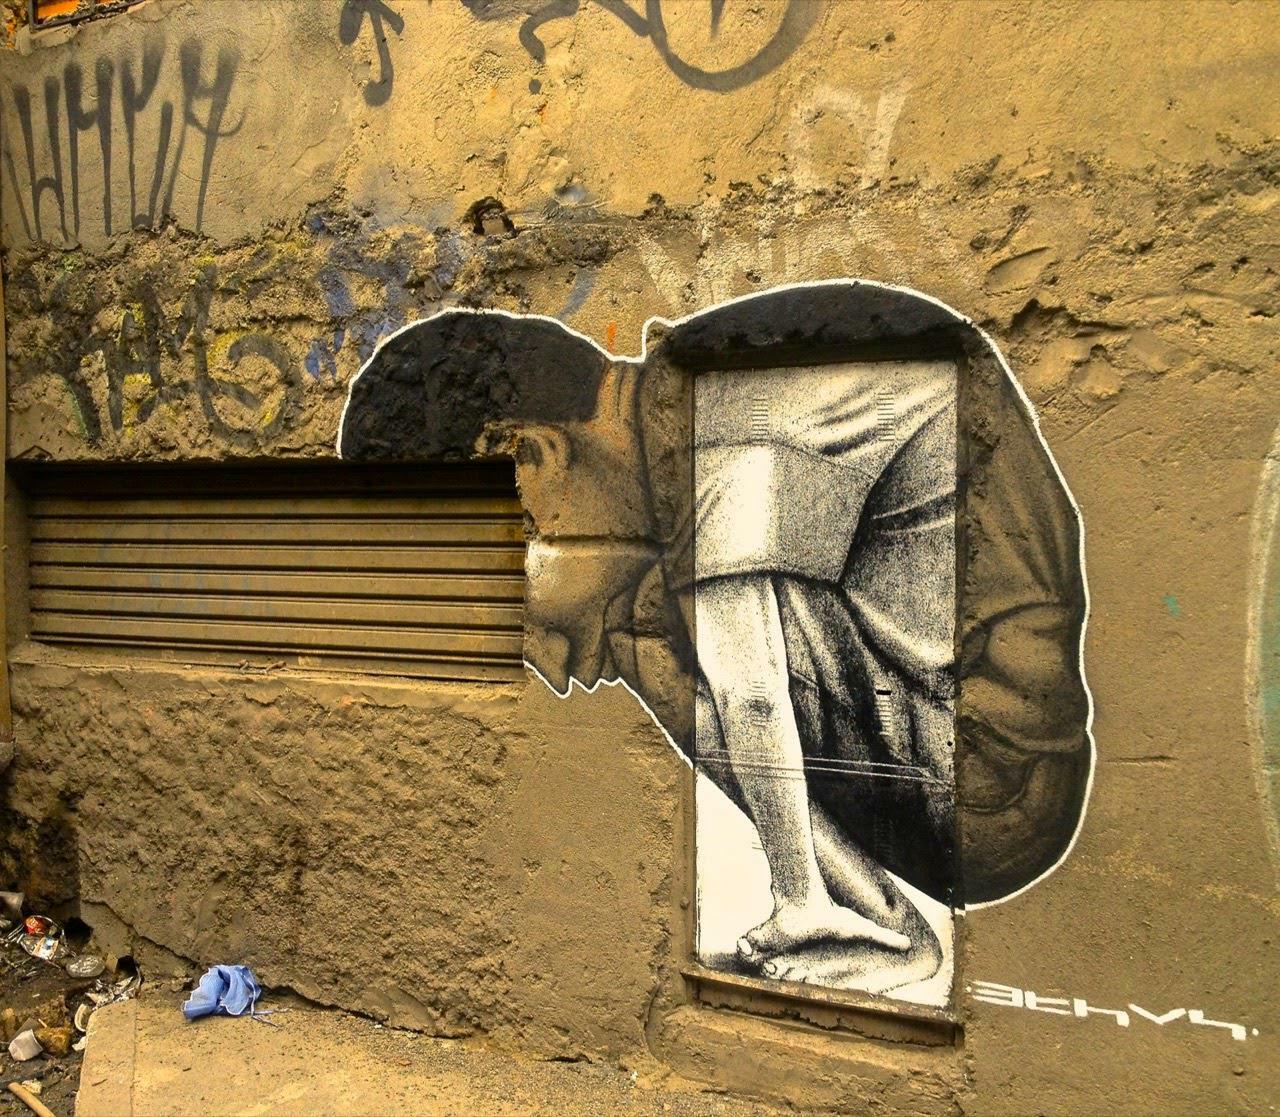 Streetart by Ethos in São Paulo (Brazil)

#streetart #urbanart #mural #art #graffiti http://t.co/xC26svN8IG